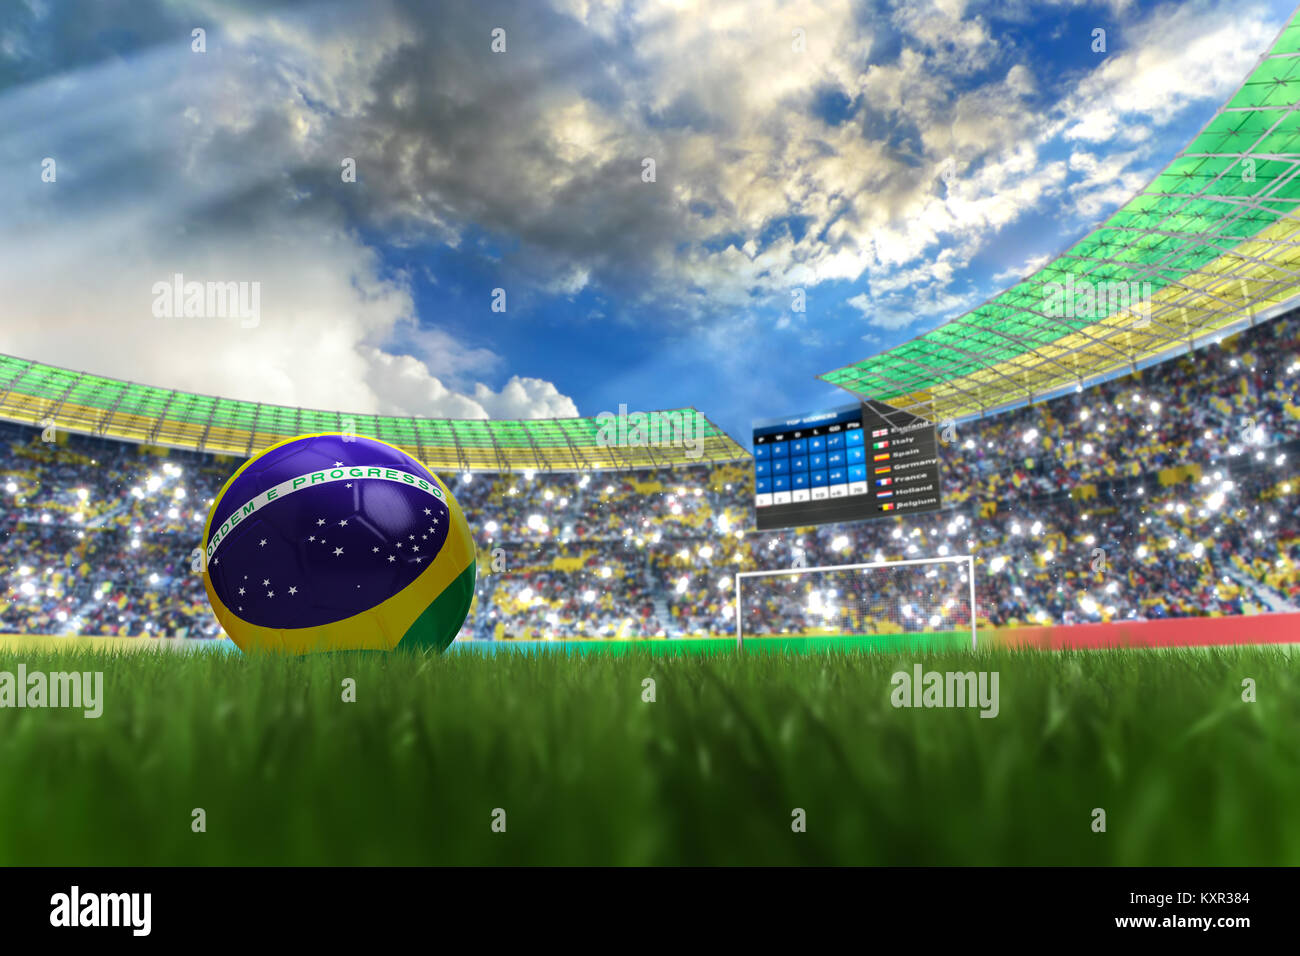 Le rendu 3D de ballons en l'an 2014 dans un stade de football Banque D'Images